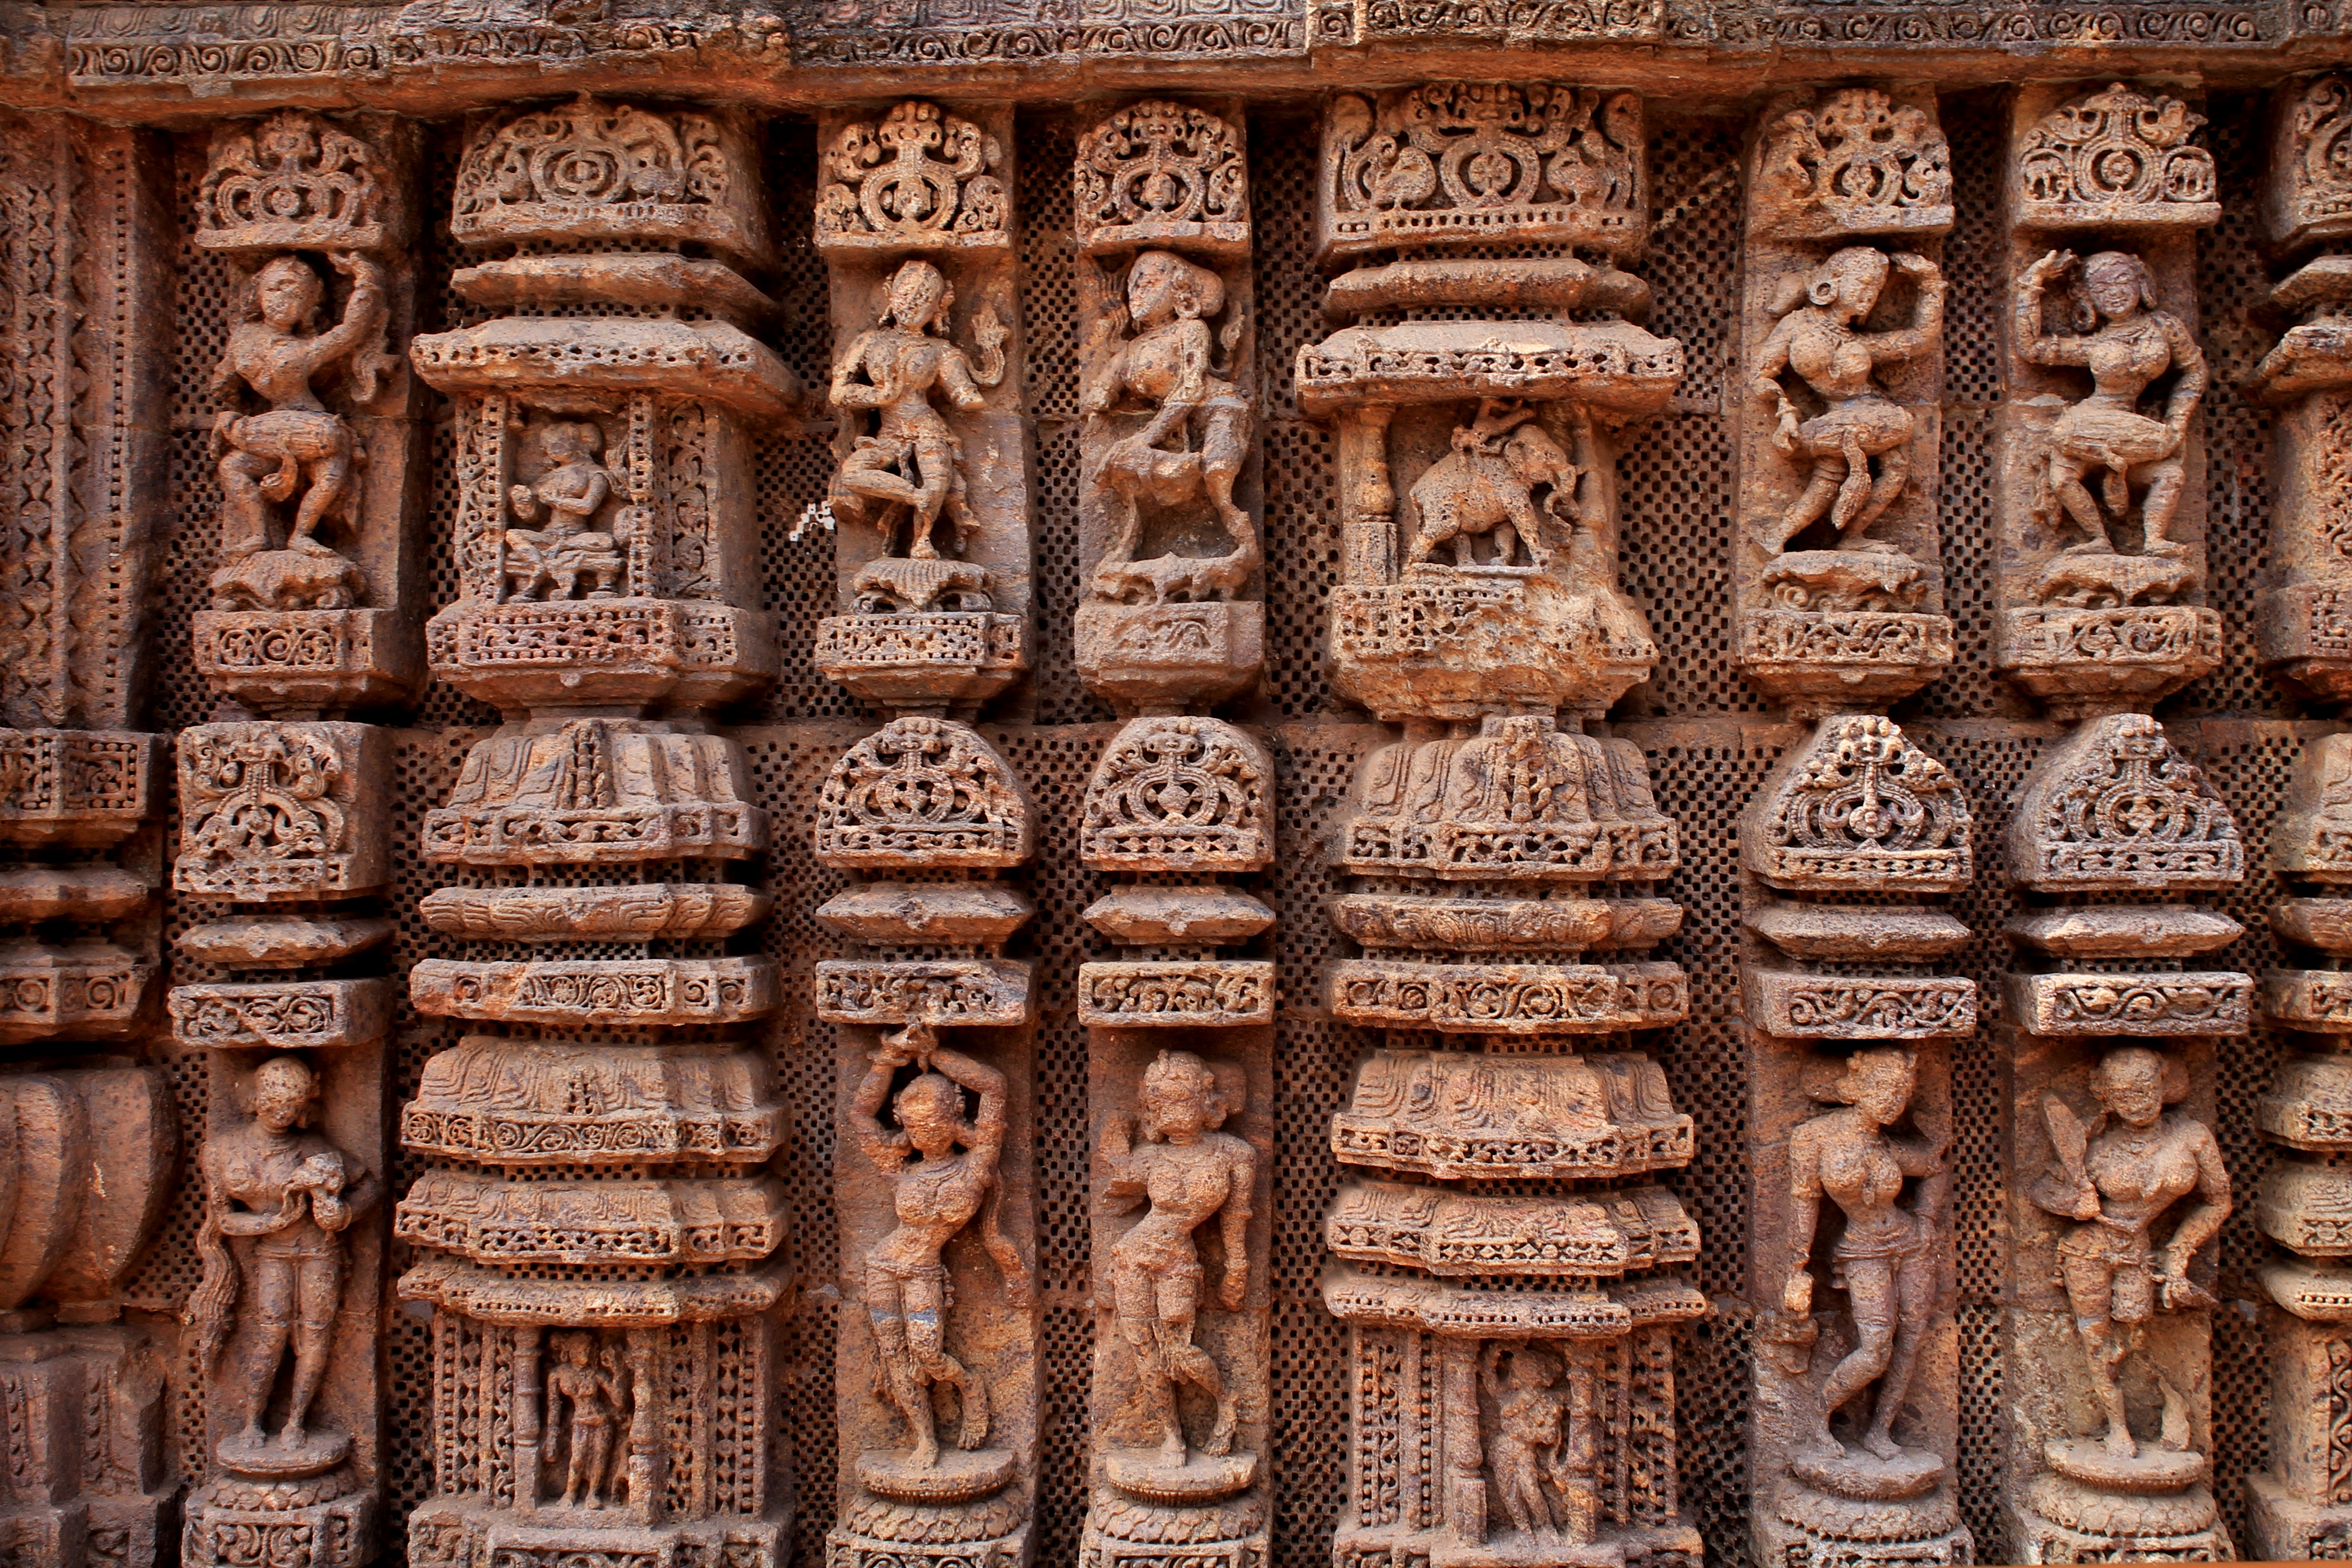 Sculptures at Konarak Sun Temple (Illustration) - World History Encyclopedia